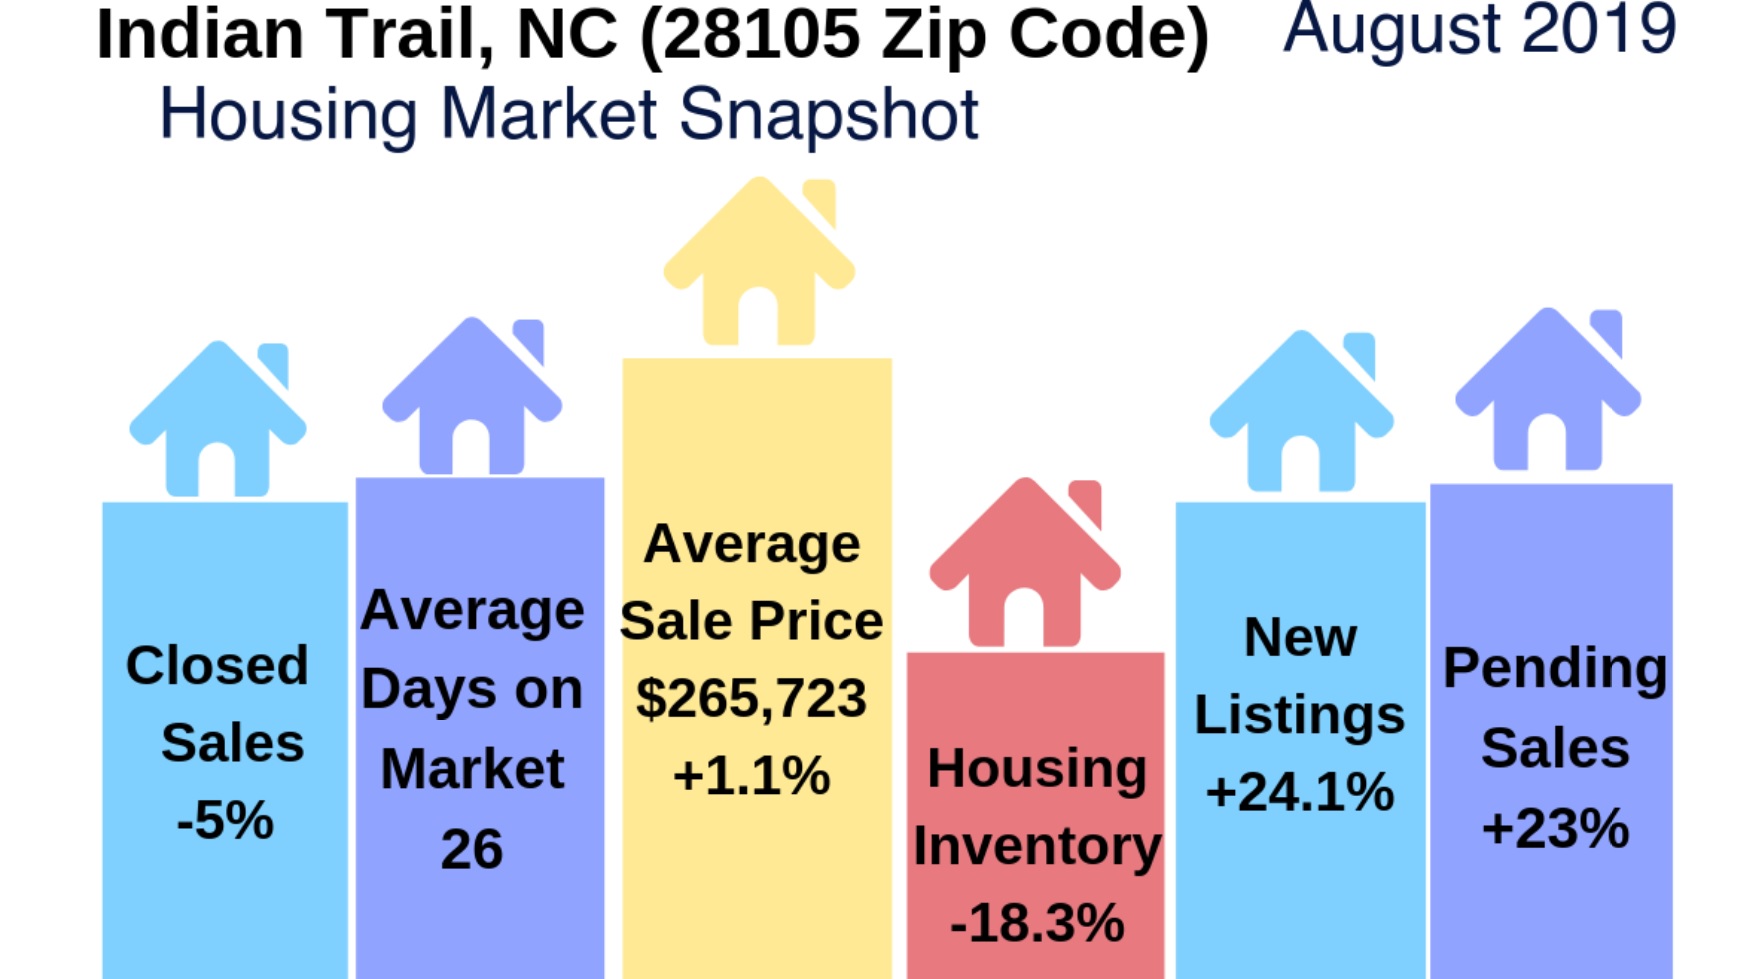 Indian Trail, NC (28079 Zip Code) Housing Market Update: August 2019